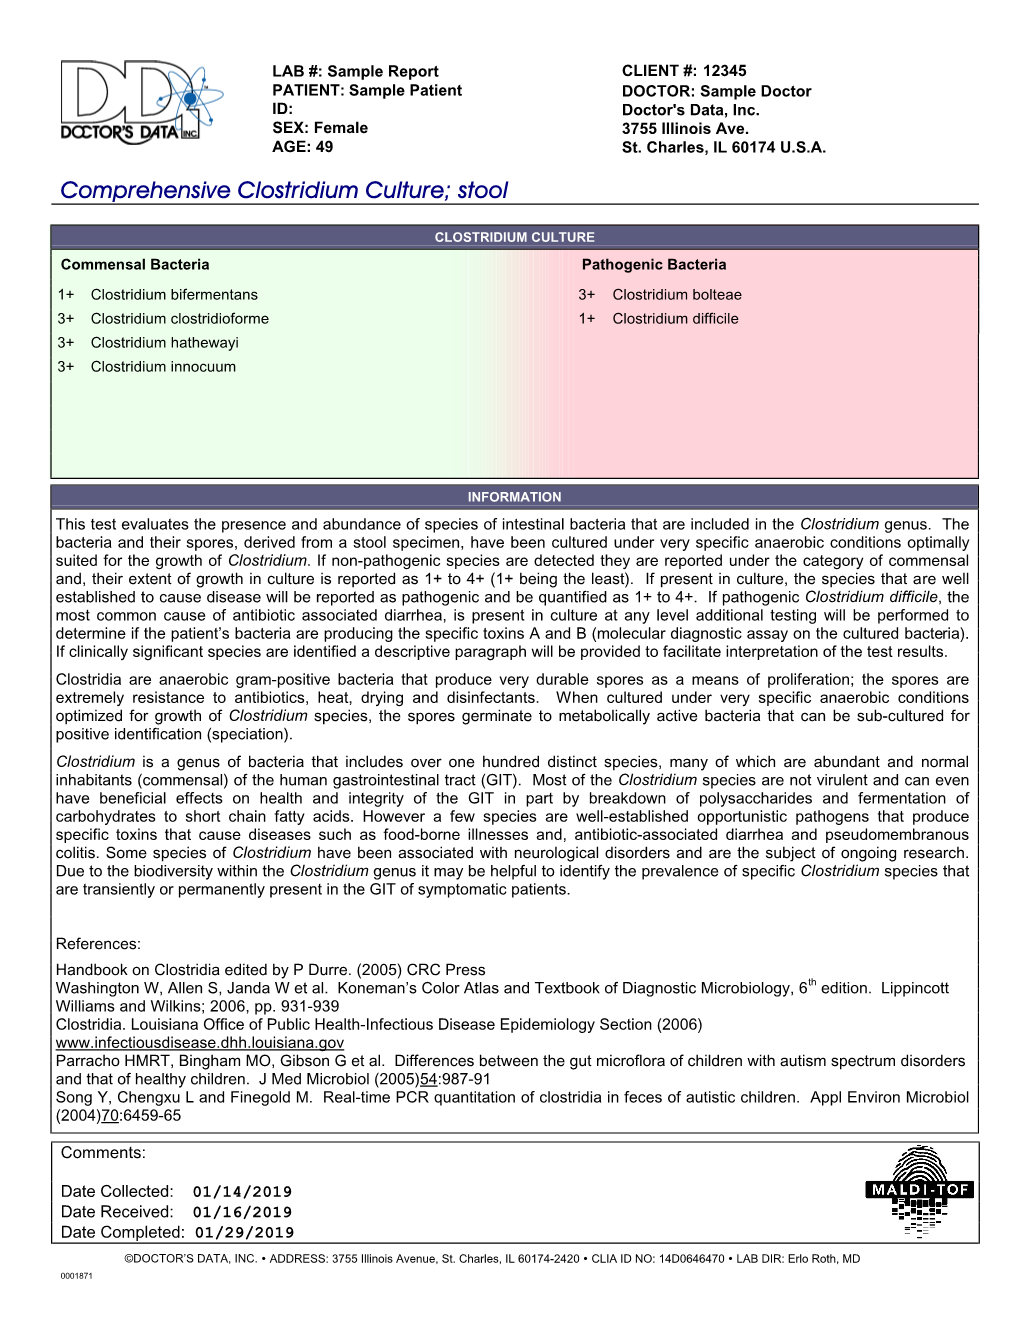 Comprehensive Clostridium Culture; Stool